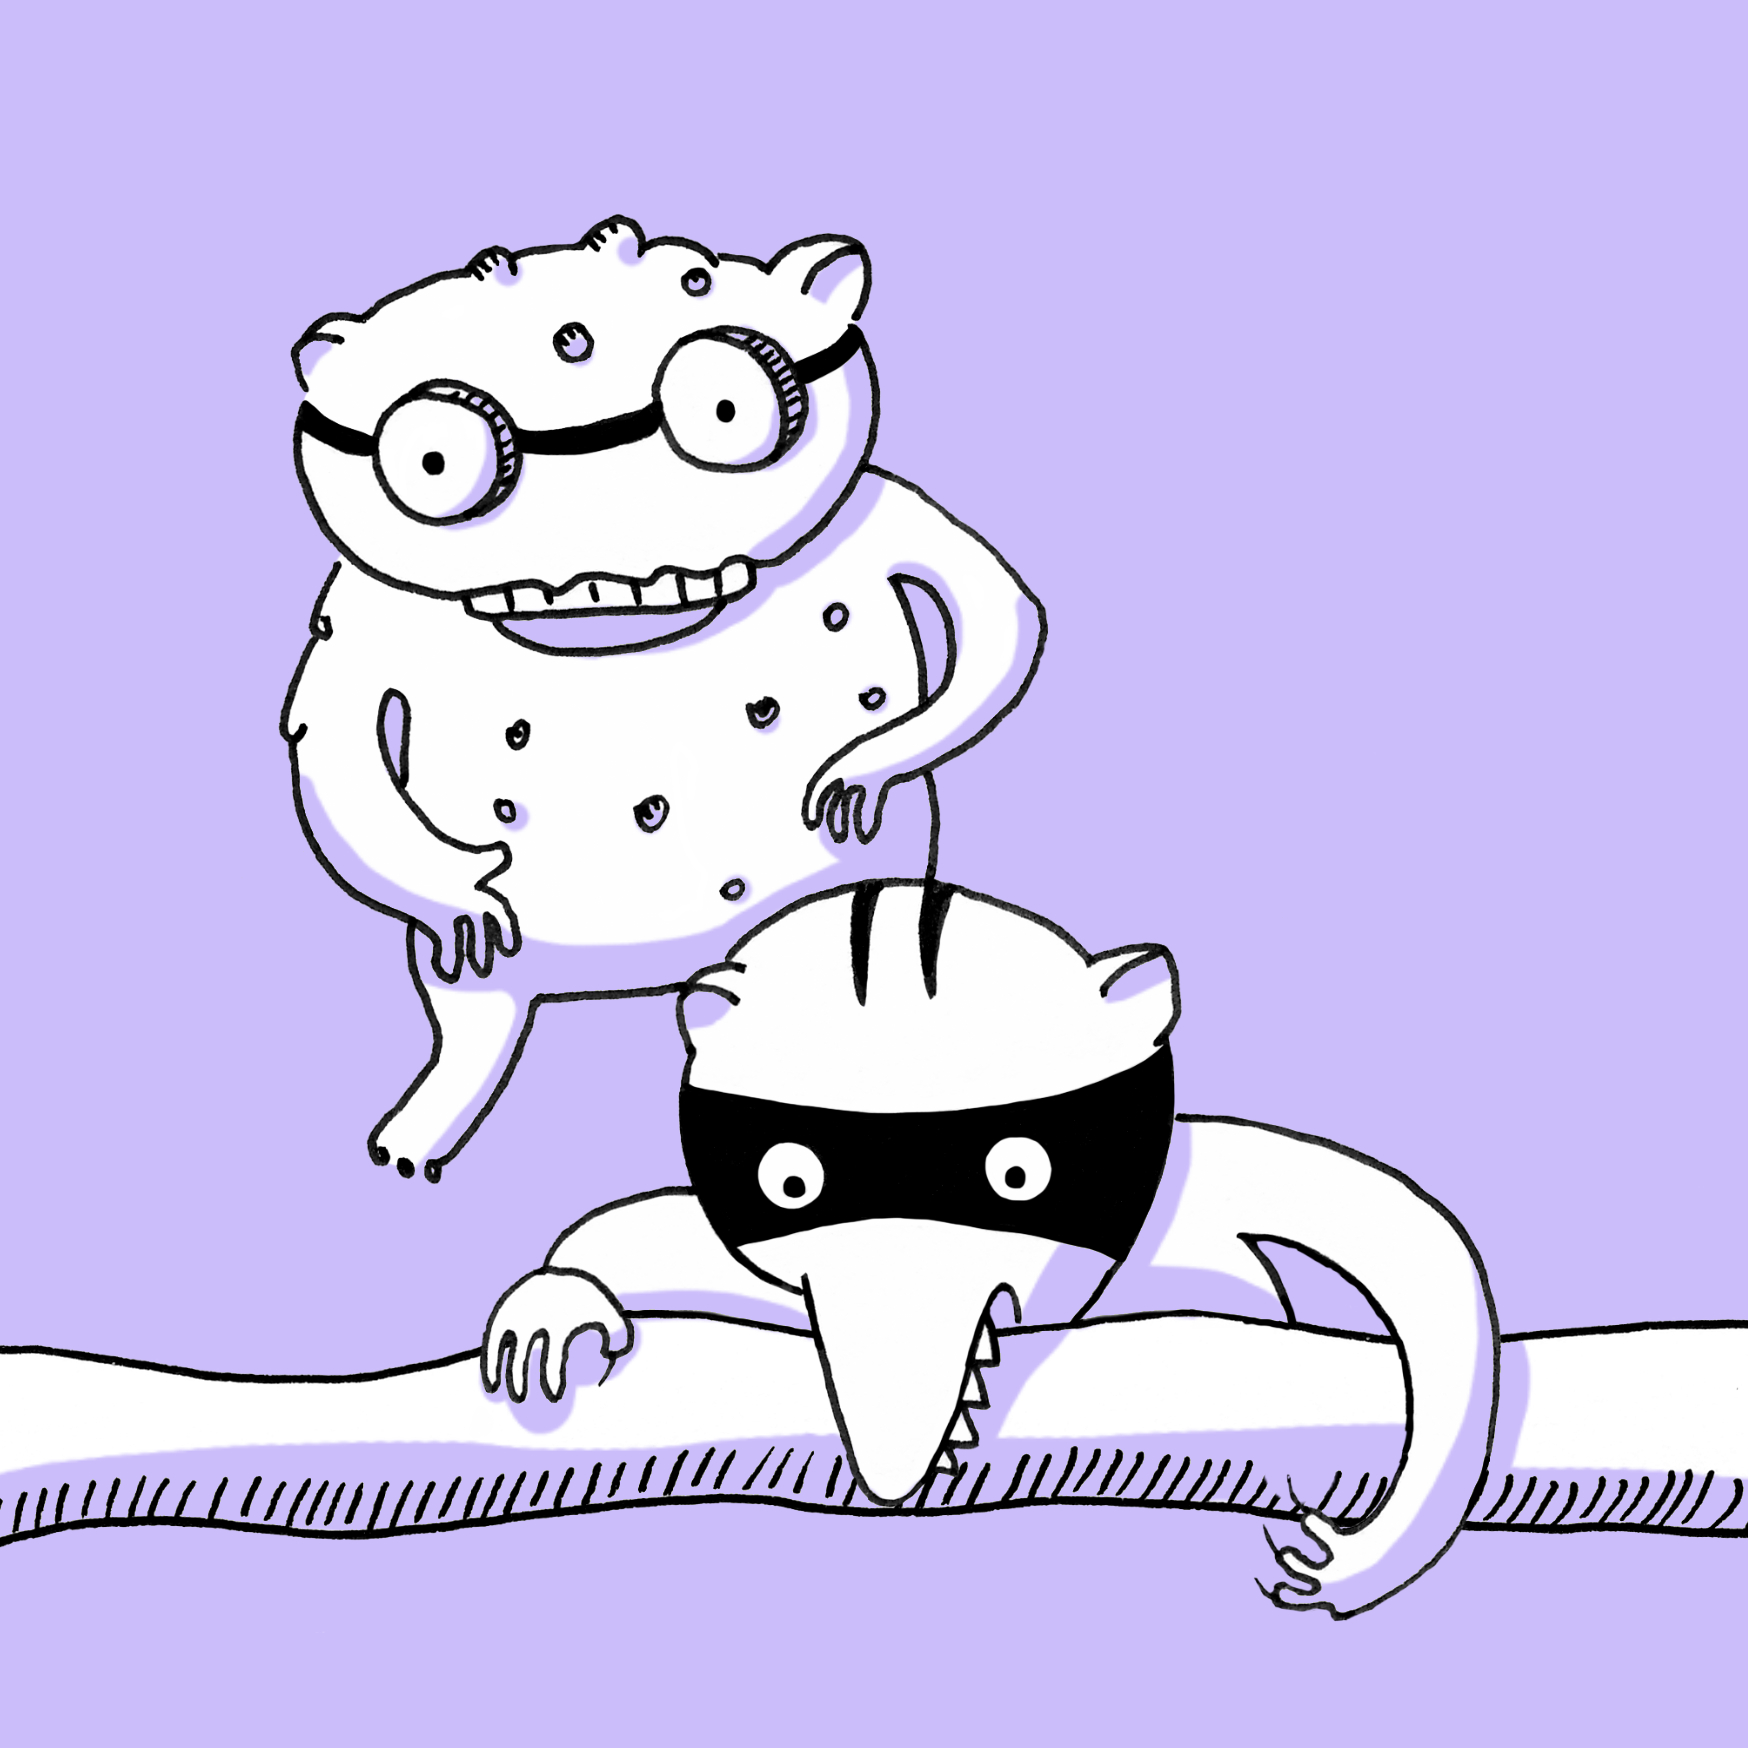 Catnip illustration by Ulrike Uhlig